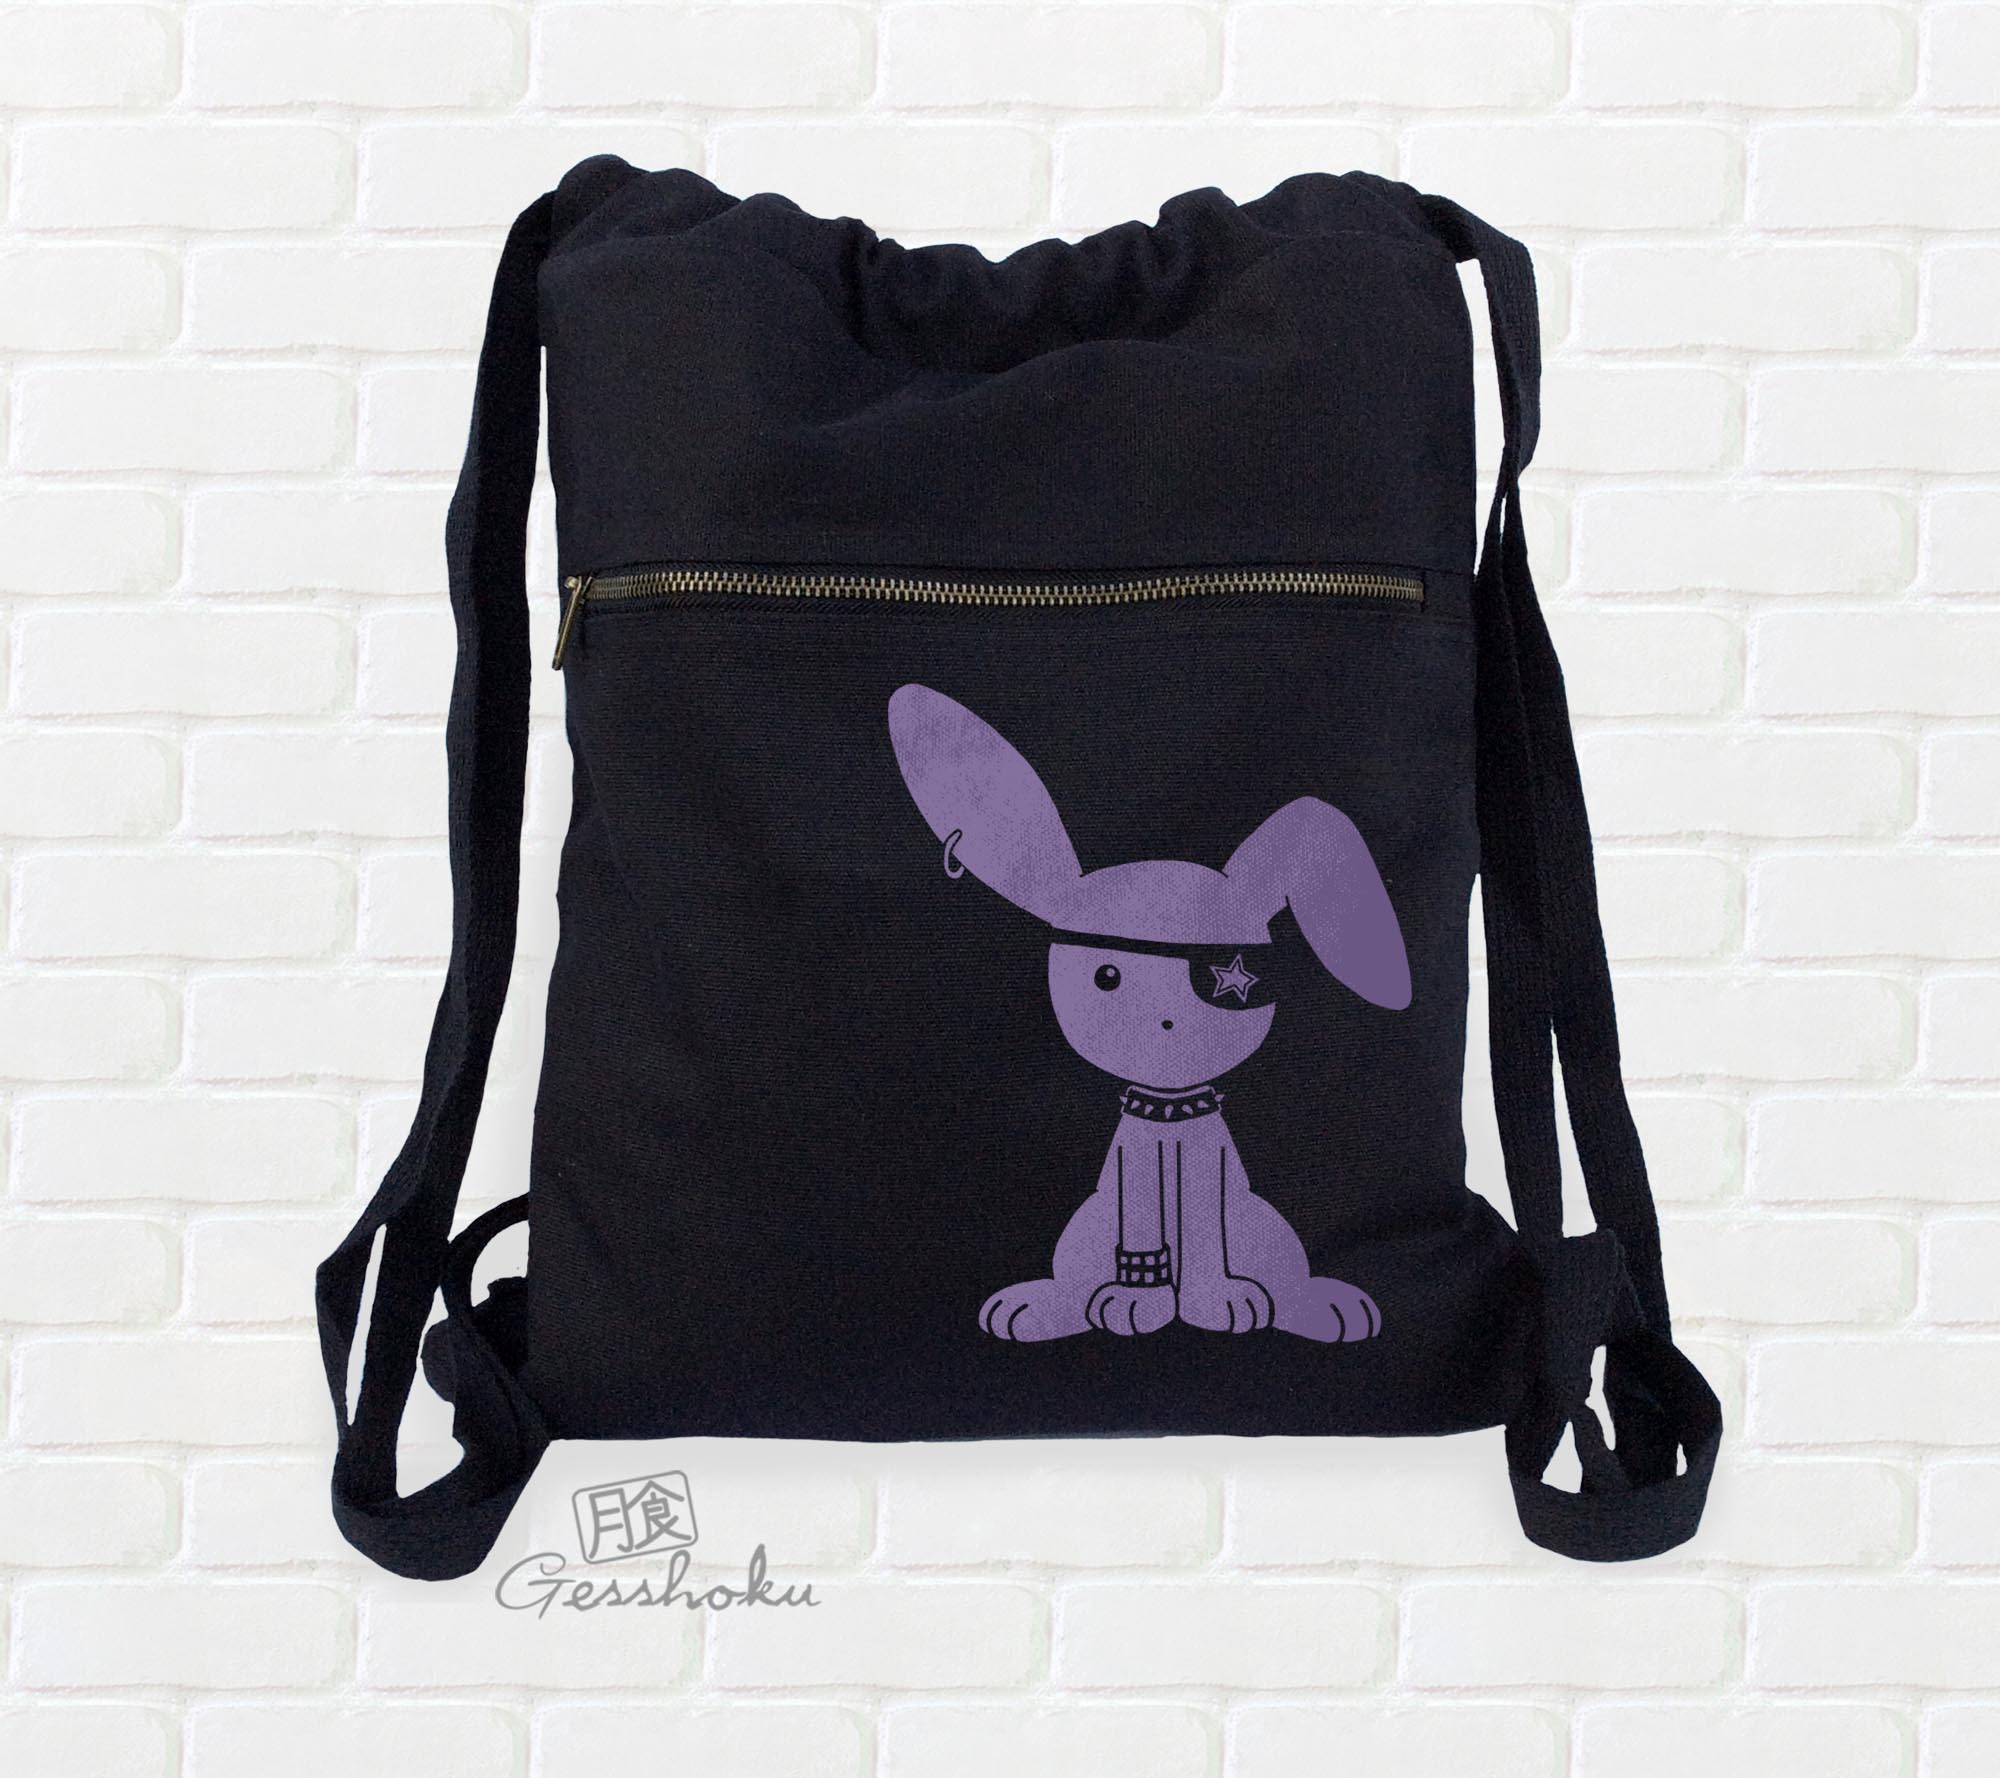 Jrock Bunny Cinch Backpack - Black/Purple